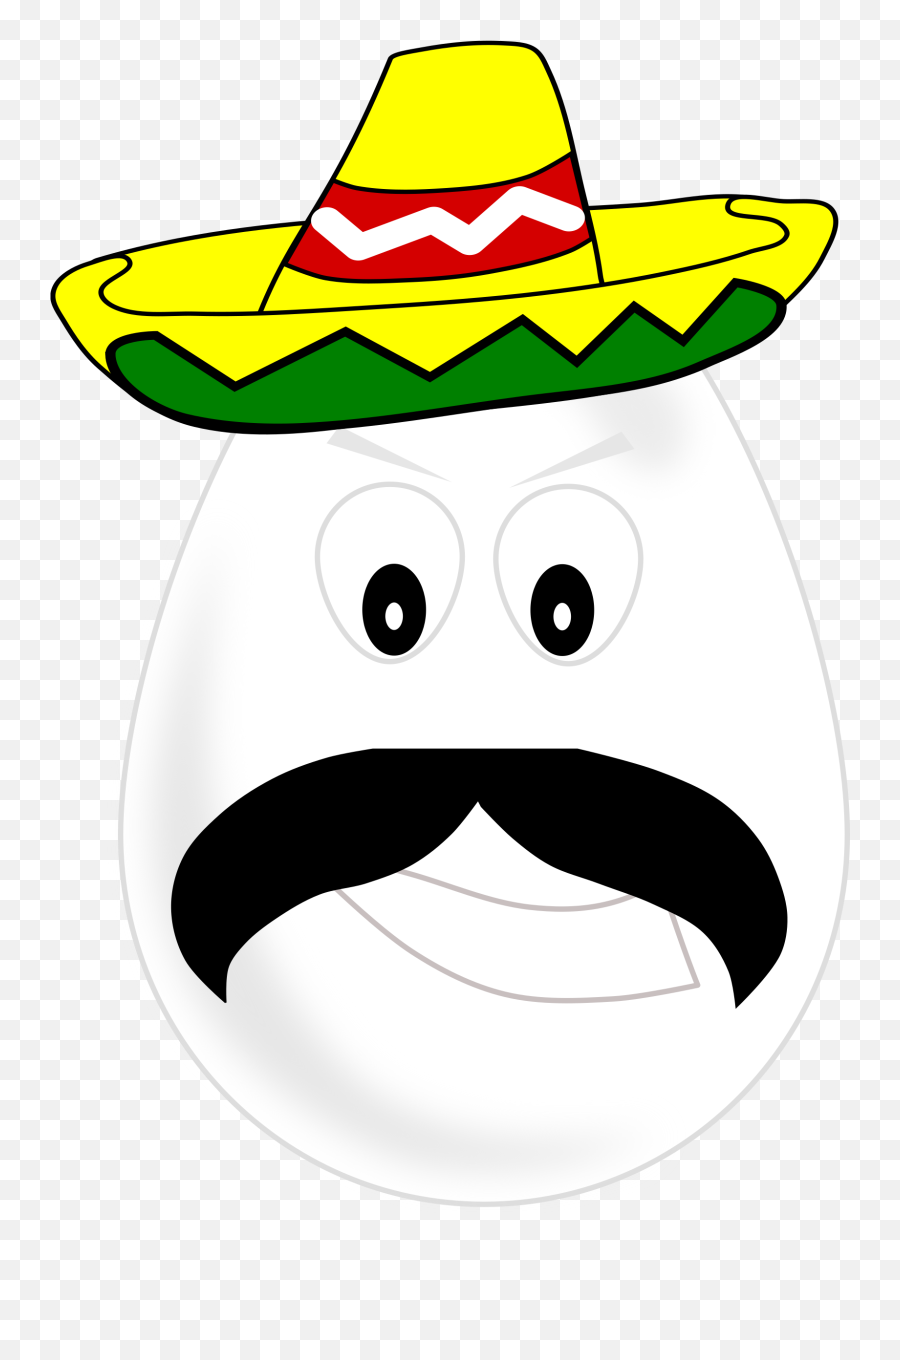 Cartoon Mexican Egg Clipart Free Image - Mexican Egg Emoji,Egg Clipart